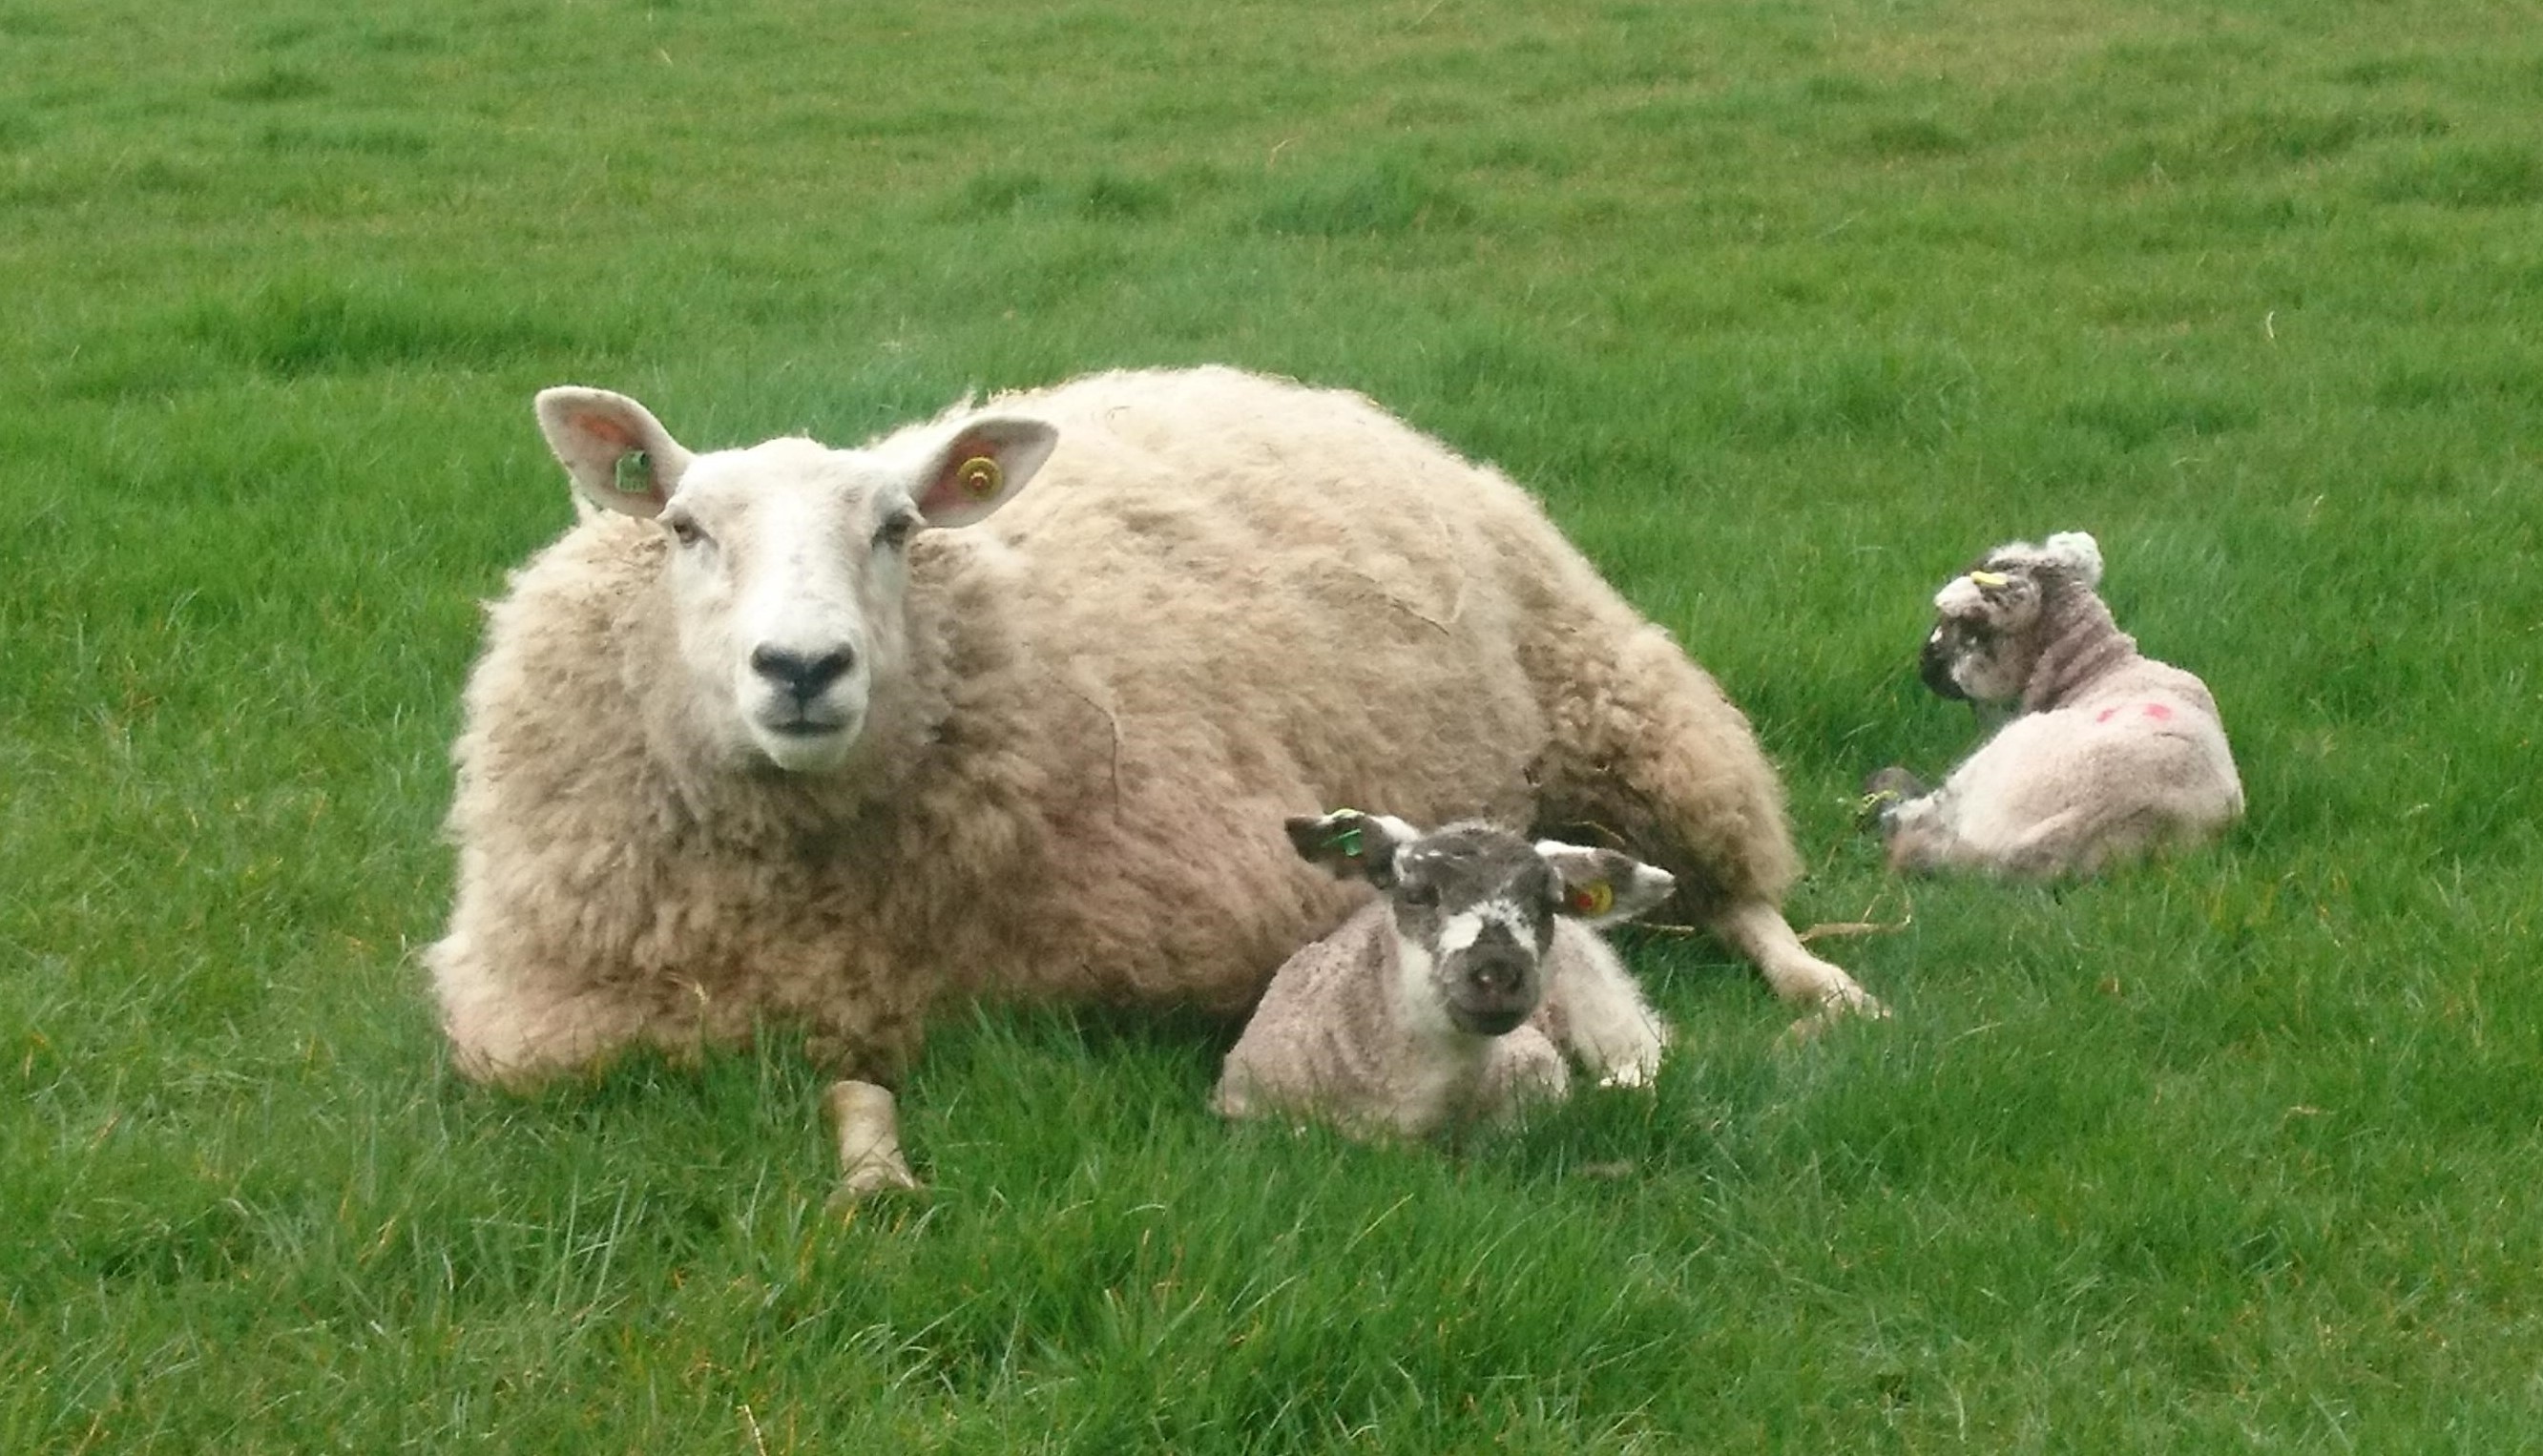 AFBI research shows breeding ewe lambs can increase lifetime performance